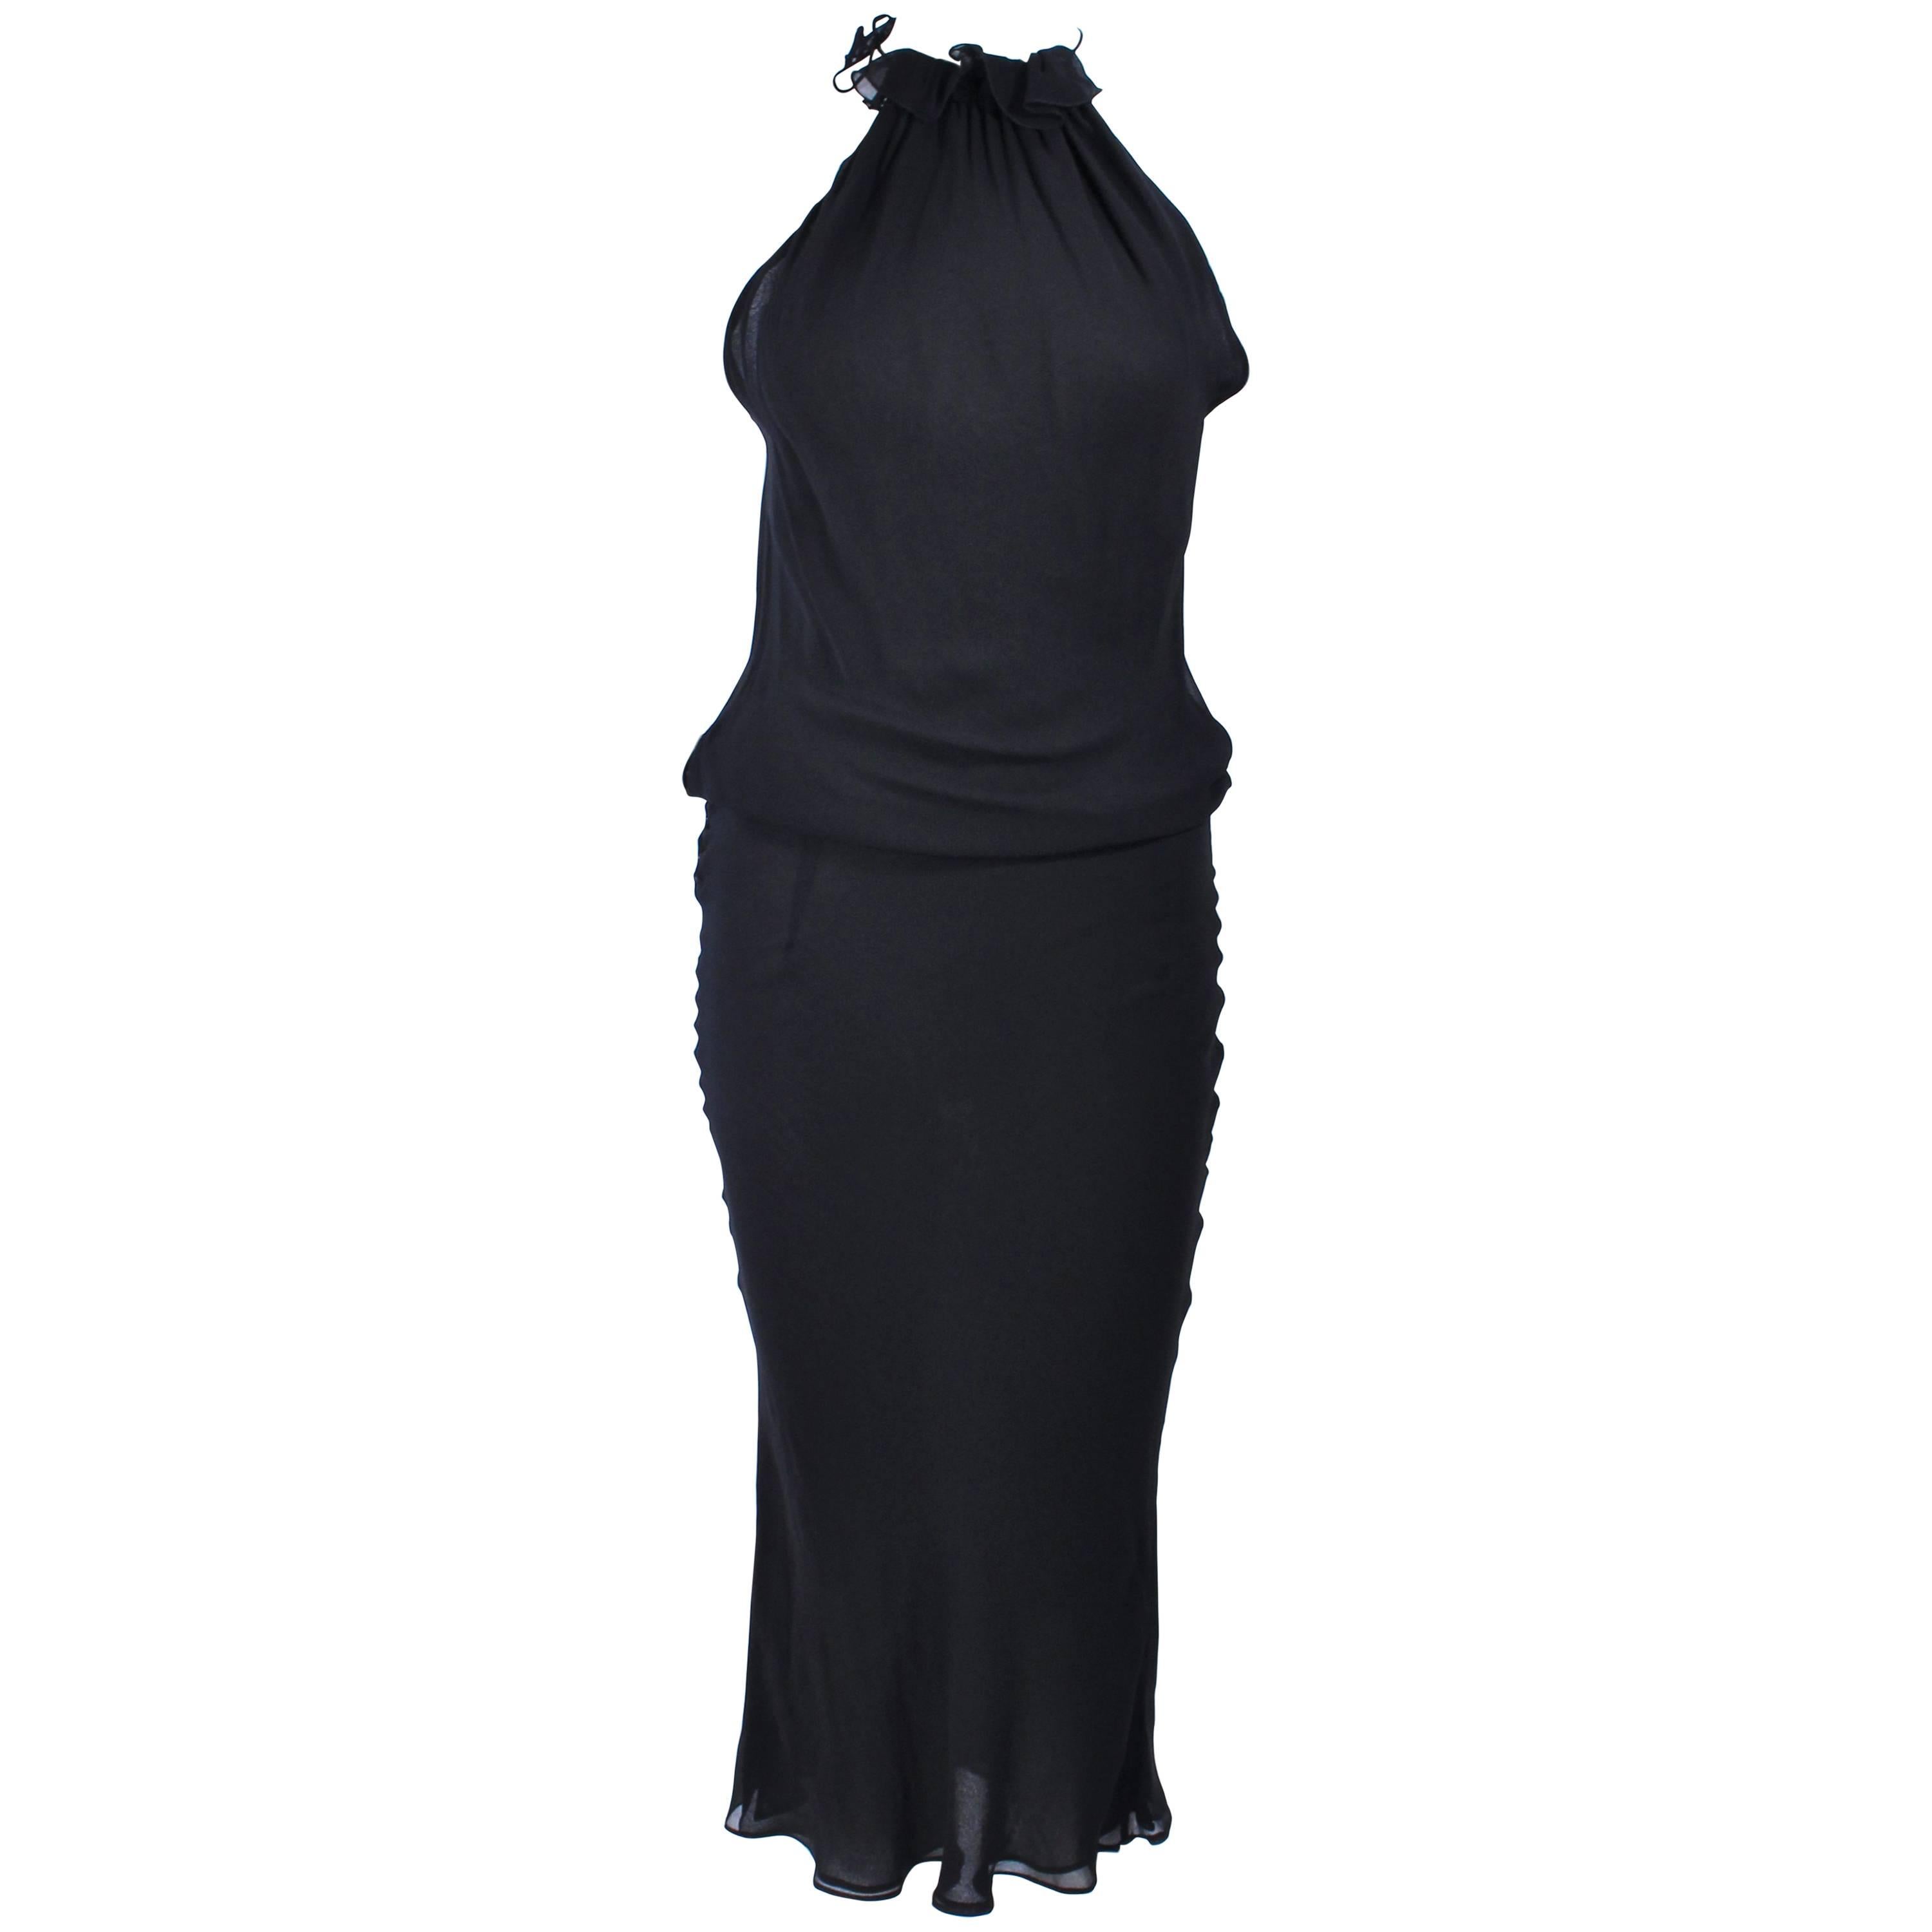 UNGARO FEVER Black Silk Chiffon Bias Cut Halter Dress with Ruffle Size 42